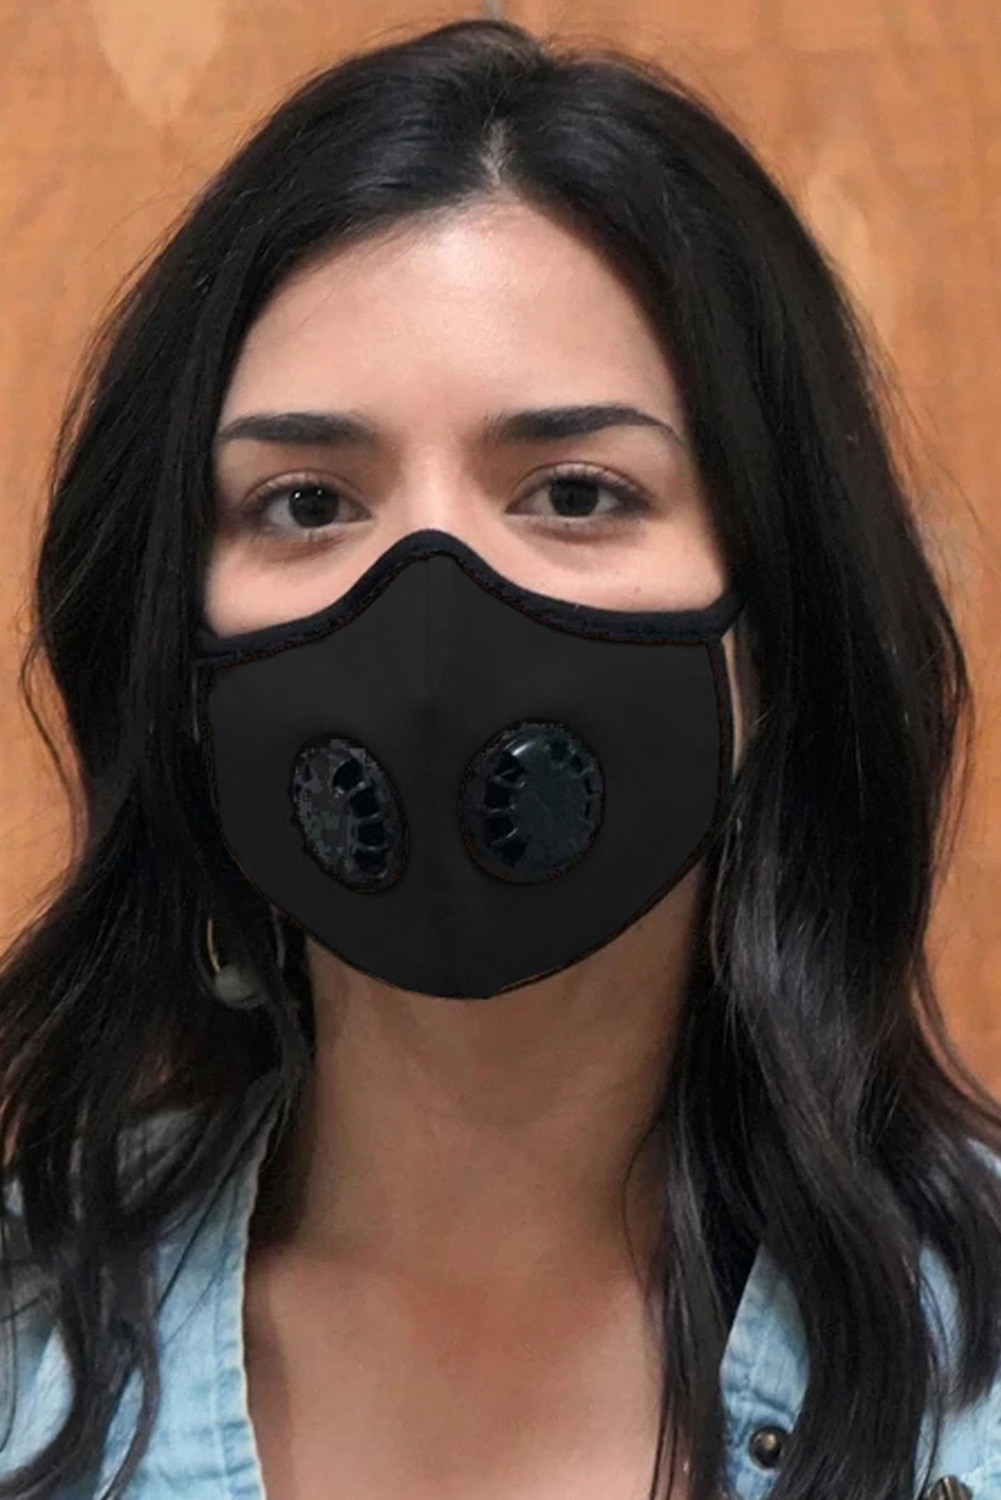 Download Wholesale Masks, Cheap Black Unisex Face Mask with Double ...